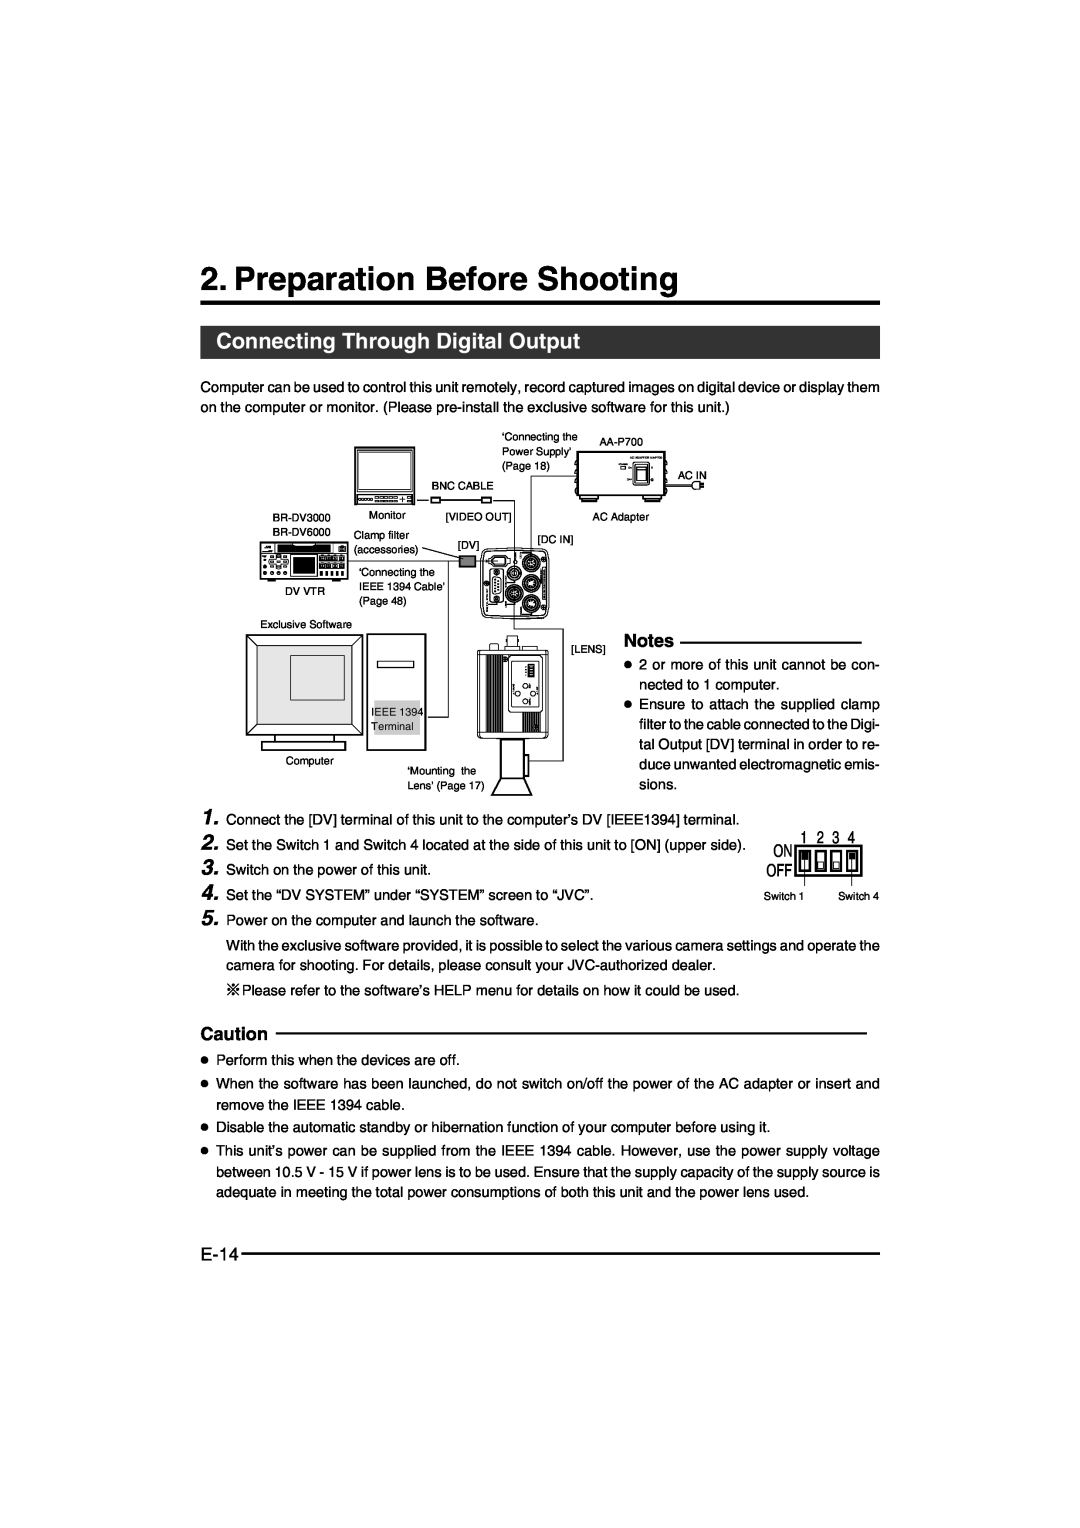 JVC KY-F550E instruction manual Preparation Before Shooting, Connecting Through Digital Output, E-14 